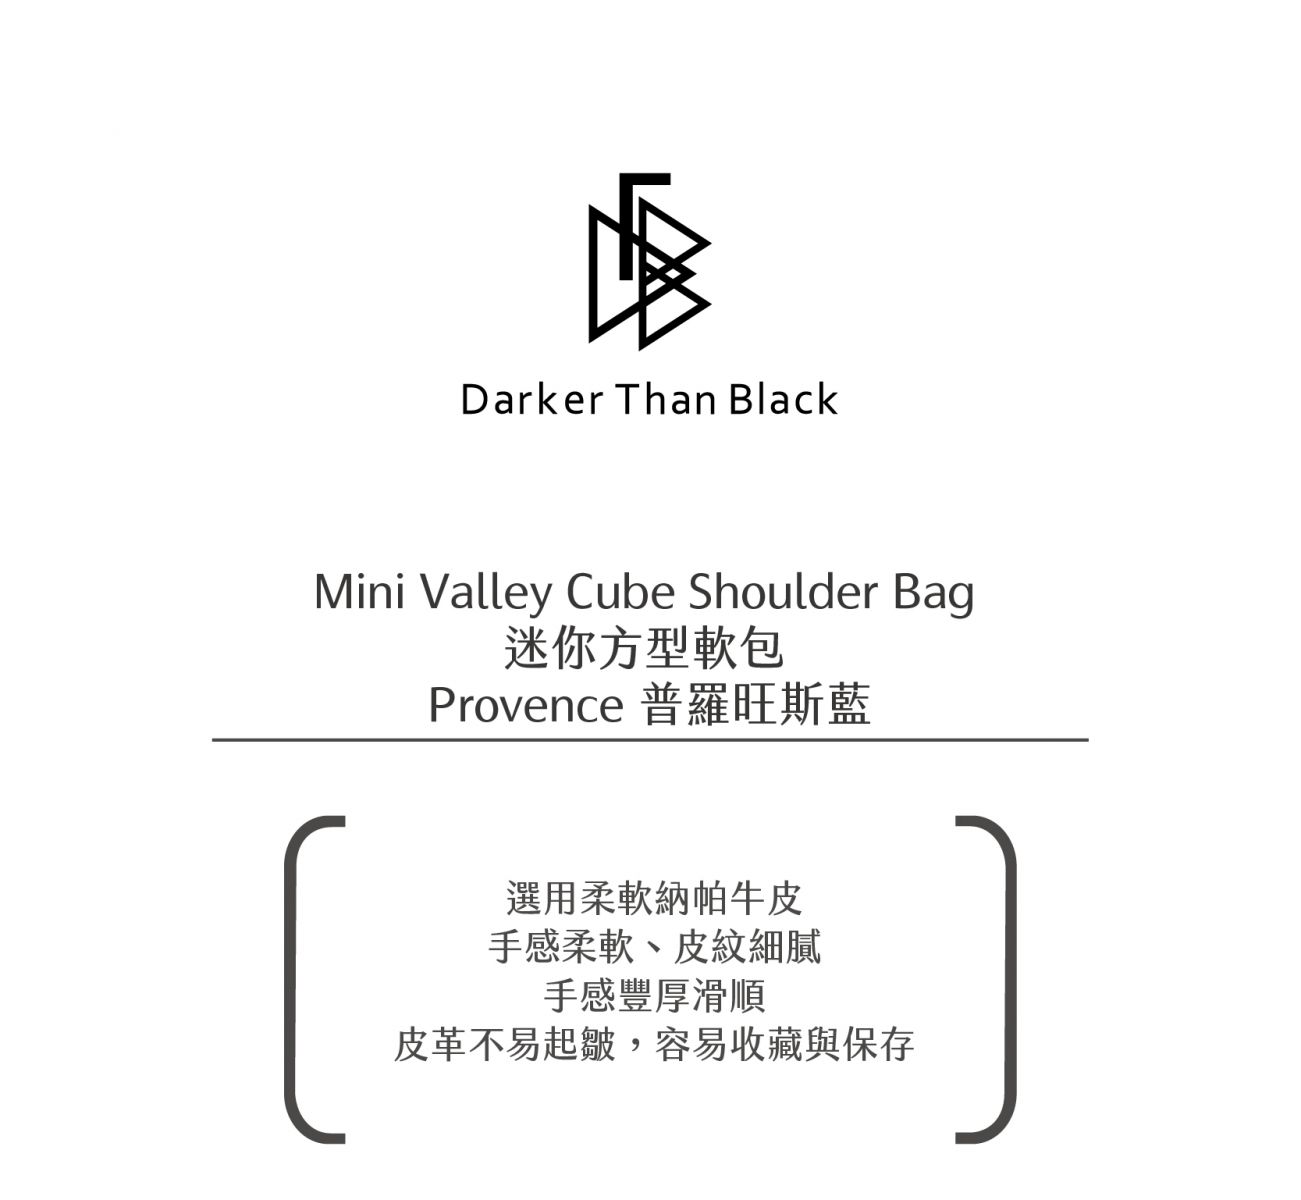 Mini Valley Cube Shoulder Bag迷你方型軟包_Provence 普羅旺斯藍